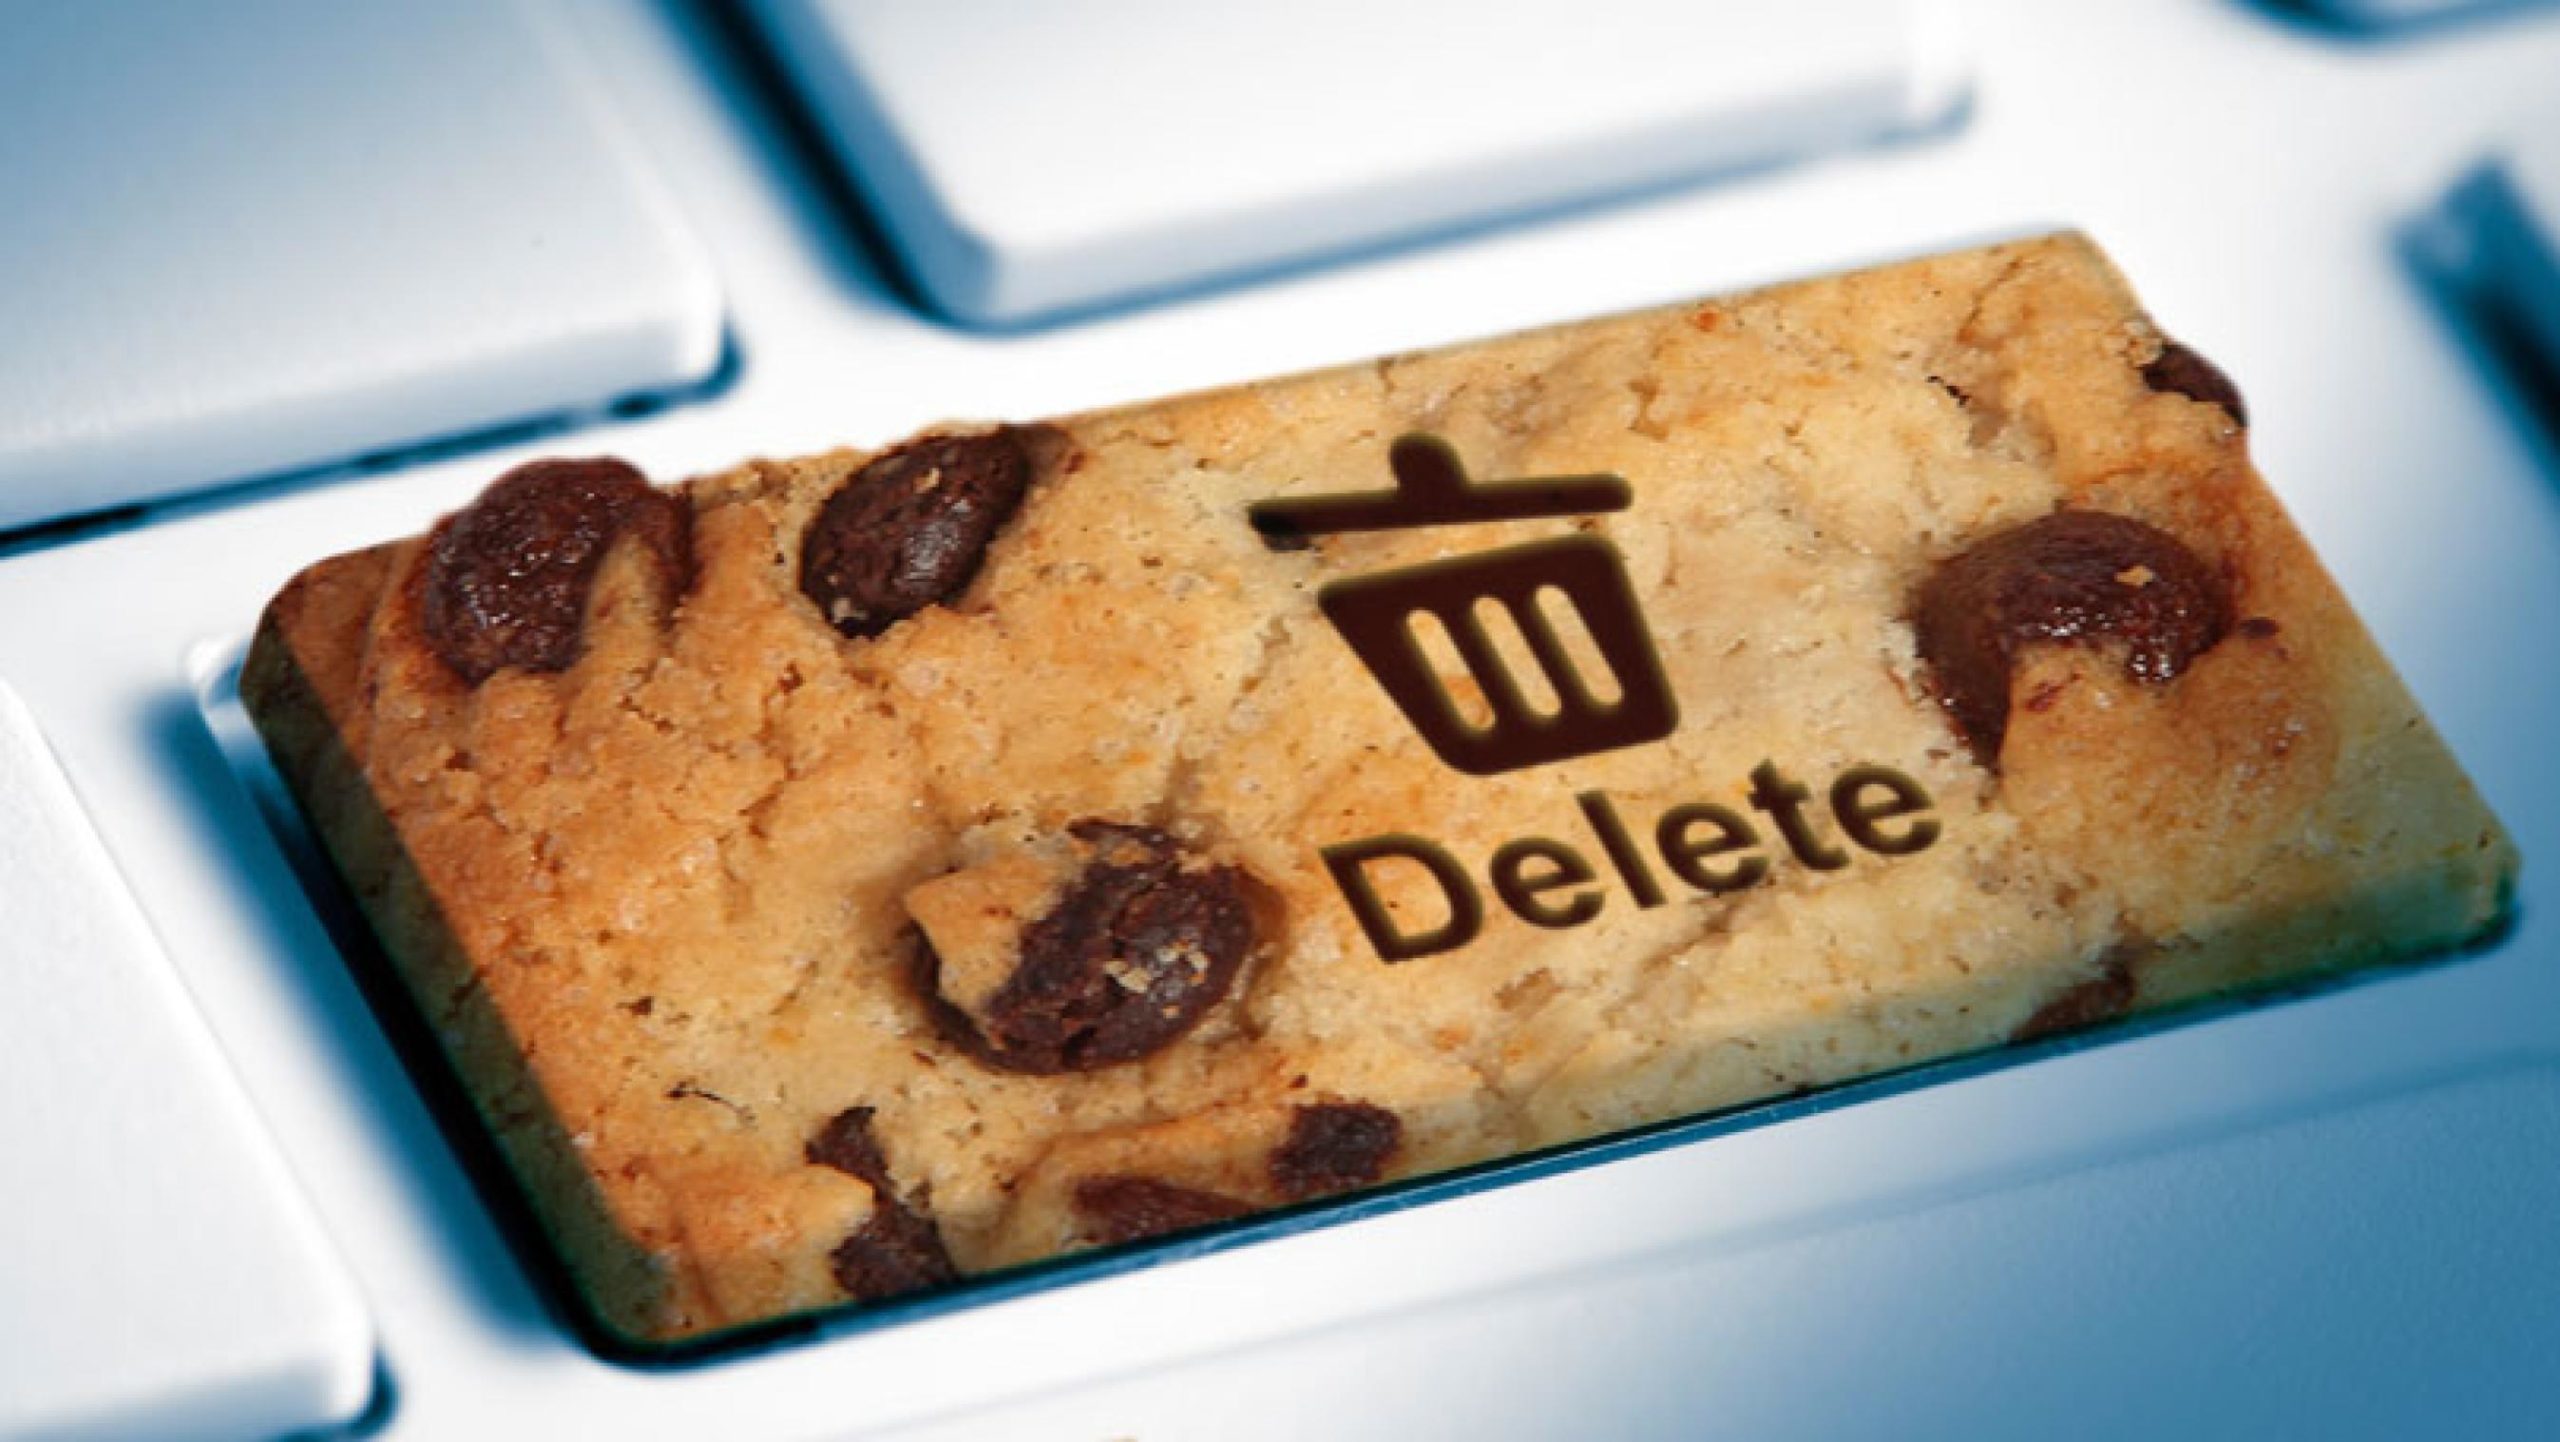 Cookie posting. Файлы cookie. Файлы печенье. Cookies в интернете. Файлы кукис.